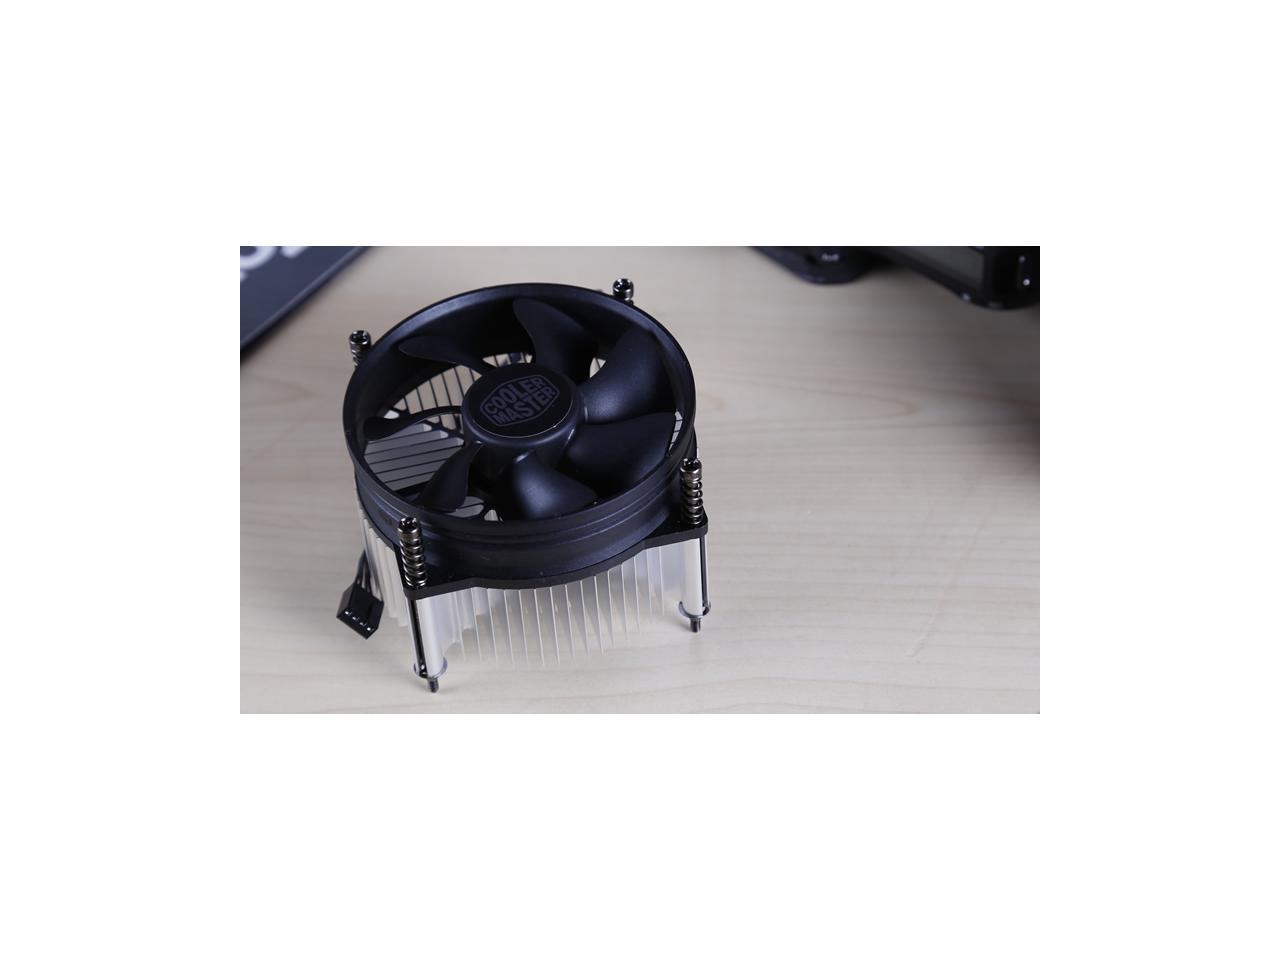 Cooler Master I50 Cpu Cooler 92mm Low Noise Cooling Fan Heatsink For Intel Socket Lga 1150 1151 1155 1156 Newegg Com